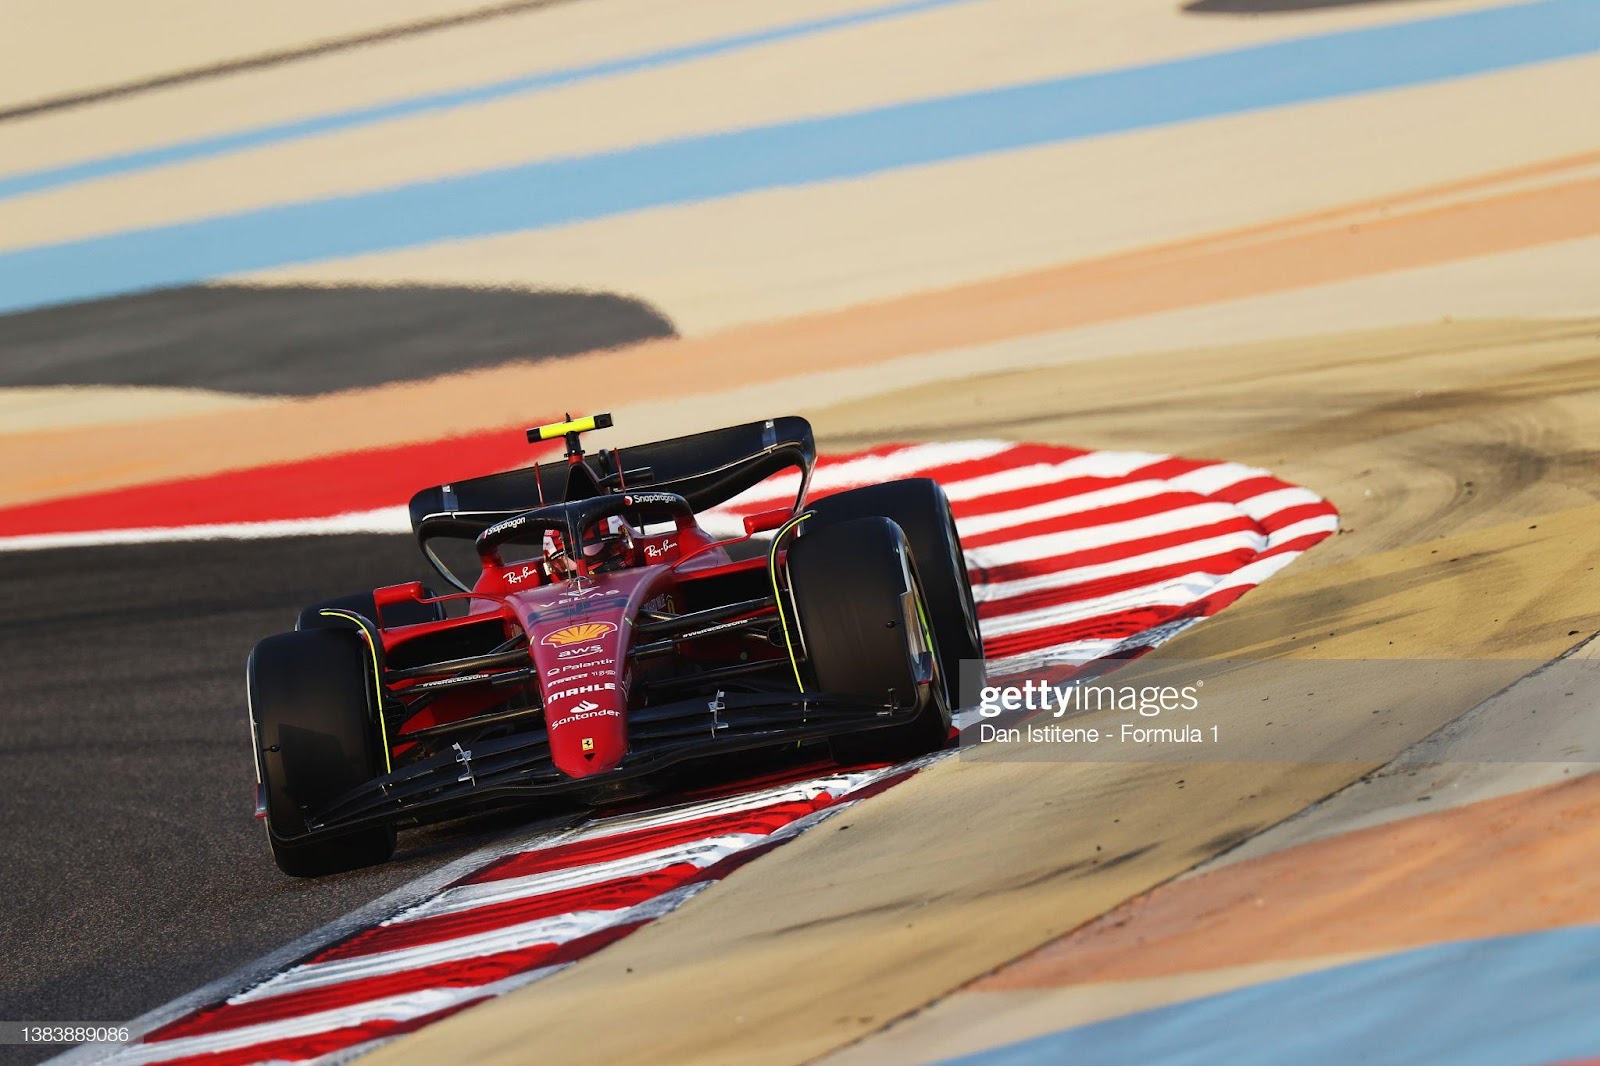 Carlos Sainz driving the Ferrari F1-75 on track.